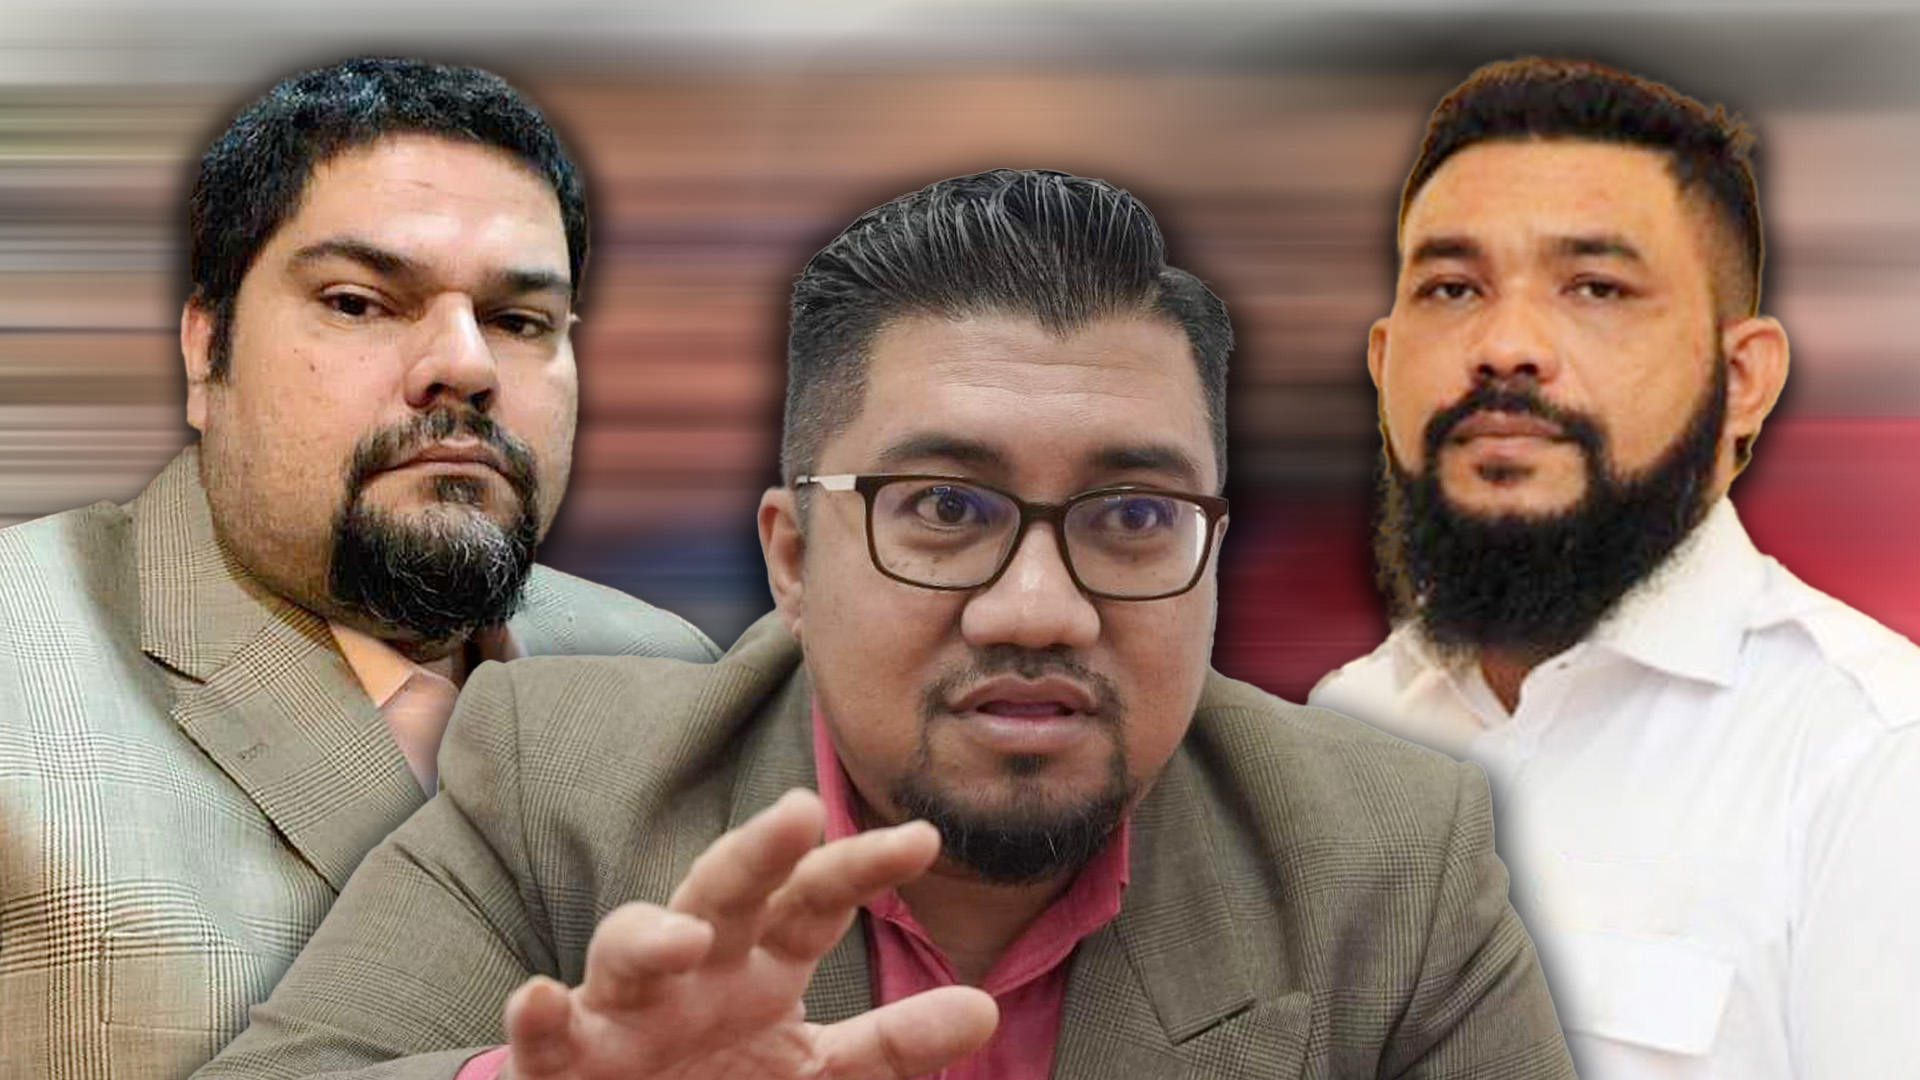 MCMC lodges reports against Chegubard, Salim Iskandar, Papagomo over false accusations